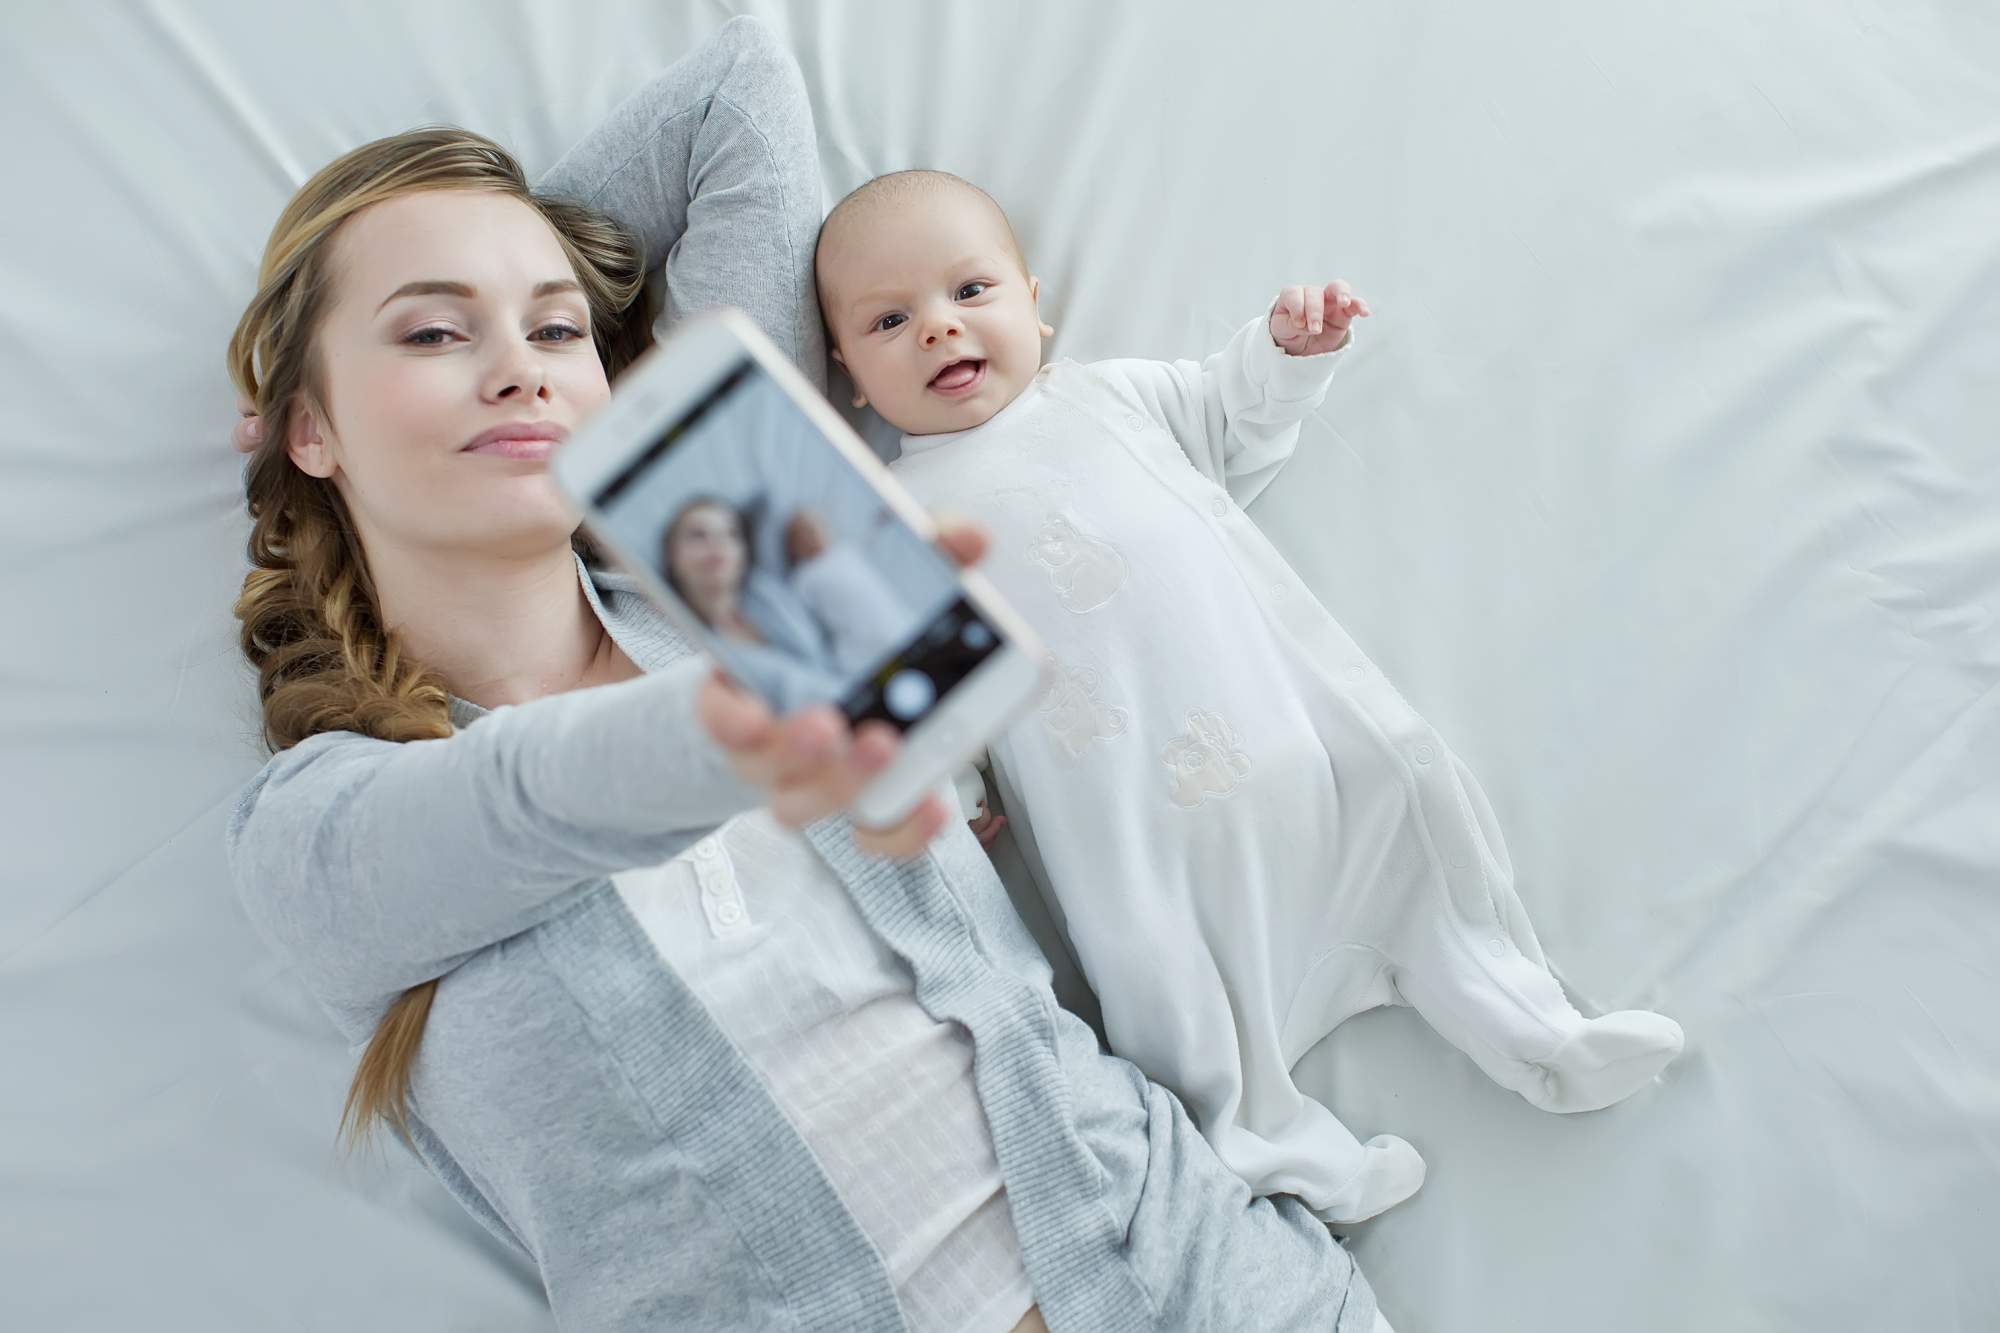 Фото ребенка с телефоном. Селфи с ребенком. Селфи с грудным ребенком. Младенец селфи. Ребенок фотографирует.